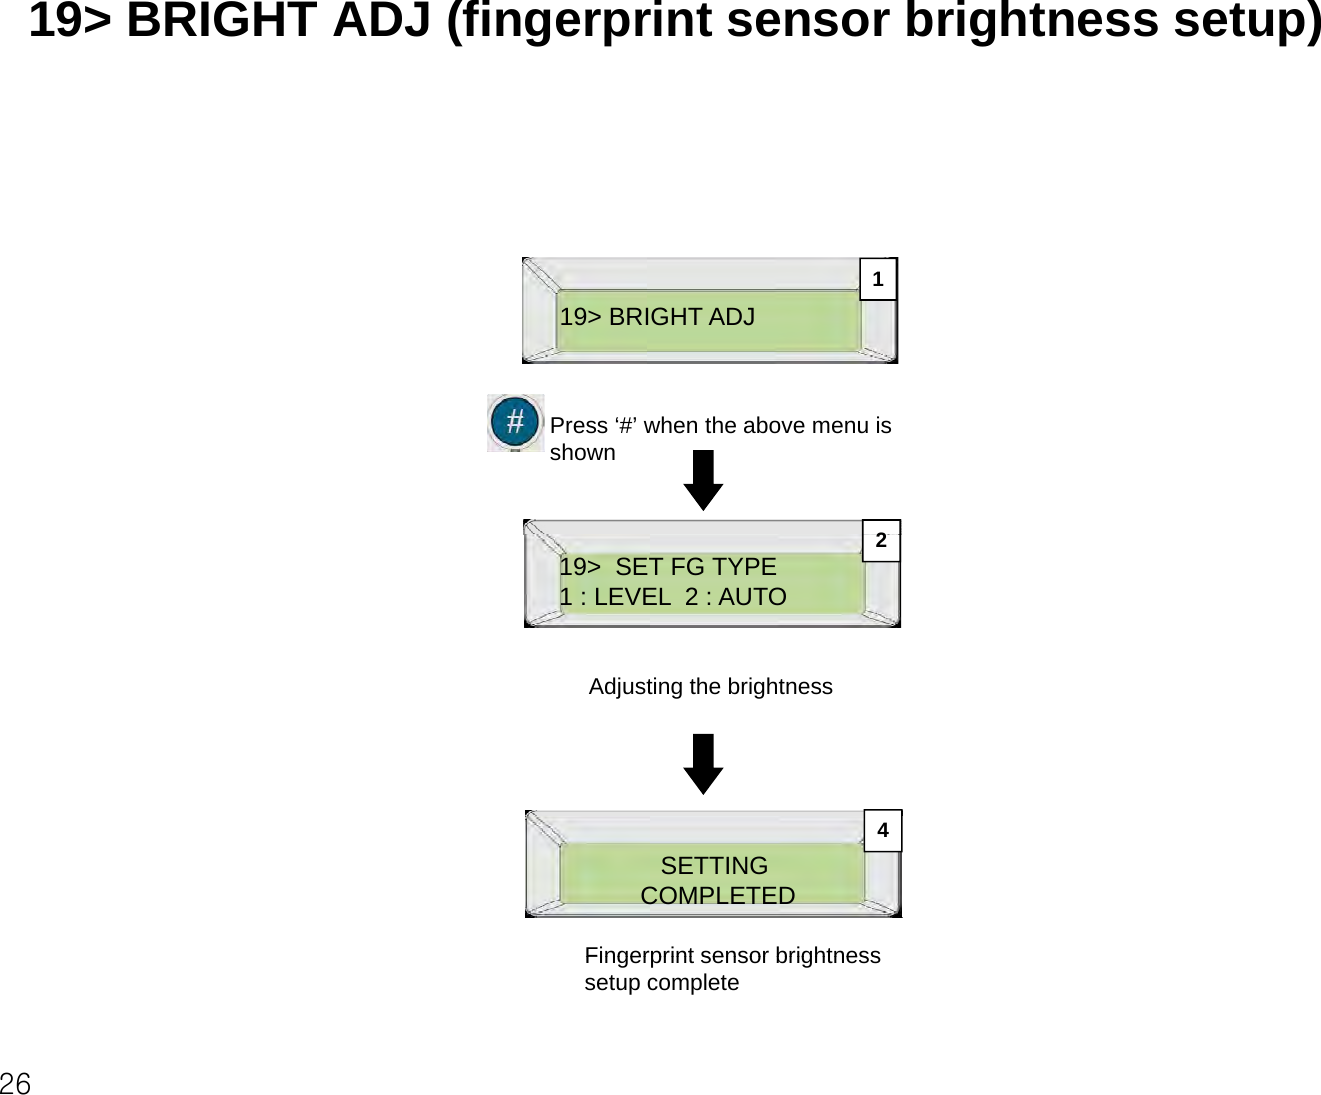 19&gt; BRIGHT ADJ (fingerprint sensor brightness setup)19&gt; BRIGHT ADJ12Press ‘#’ when the above menu is shown19&gt;  SET FG TYPE1 : LEVEL  2 : AUTO2Adjusting the brightness SETTINGCOMPLETEDFingerprint sensor brightness426Fingerprint sensor brightness setup complete